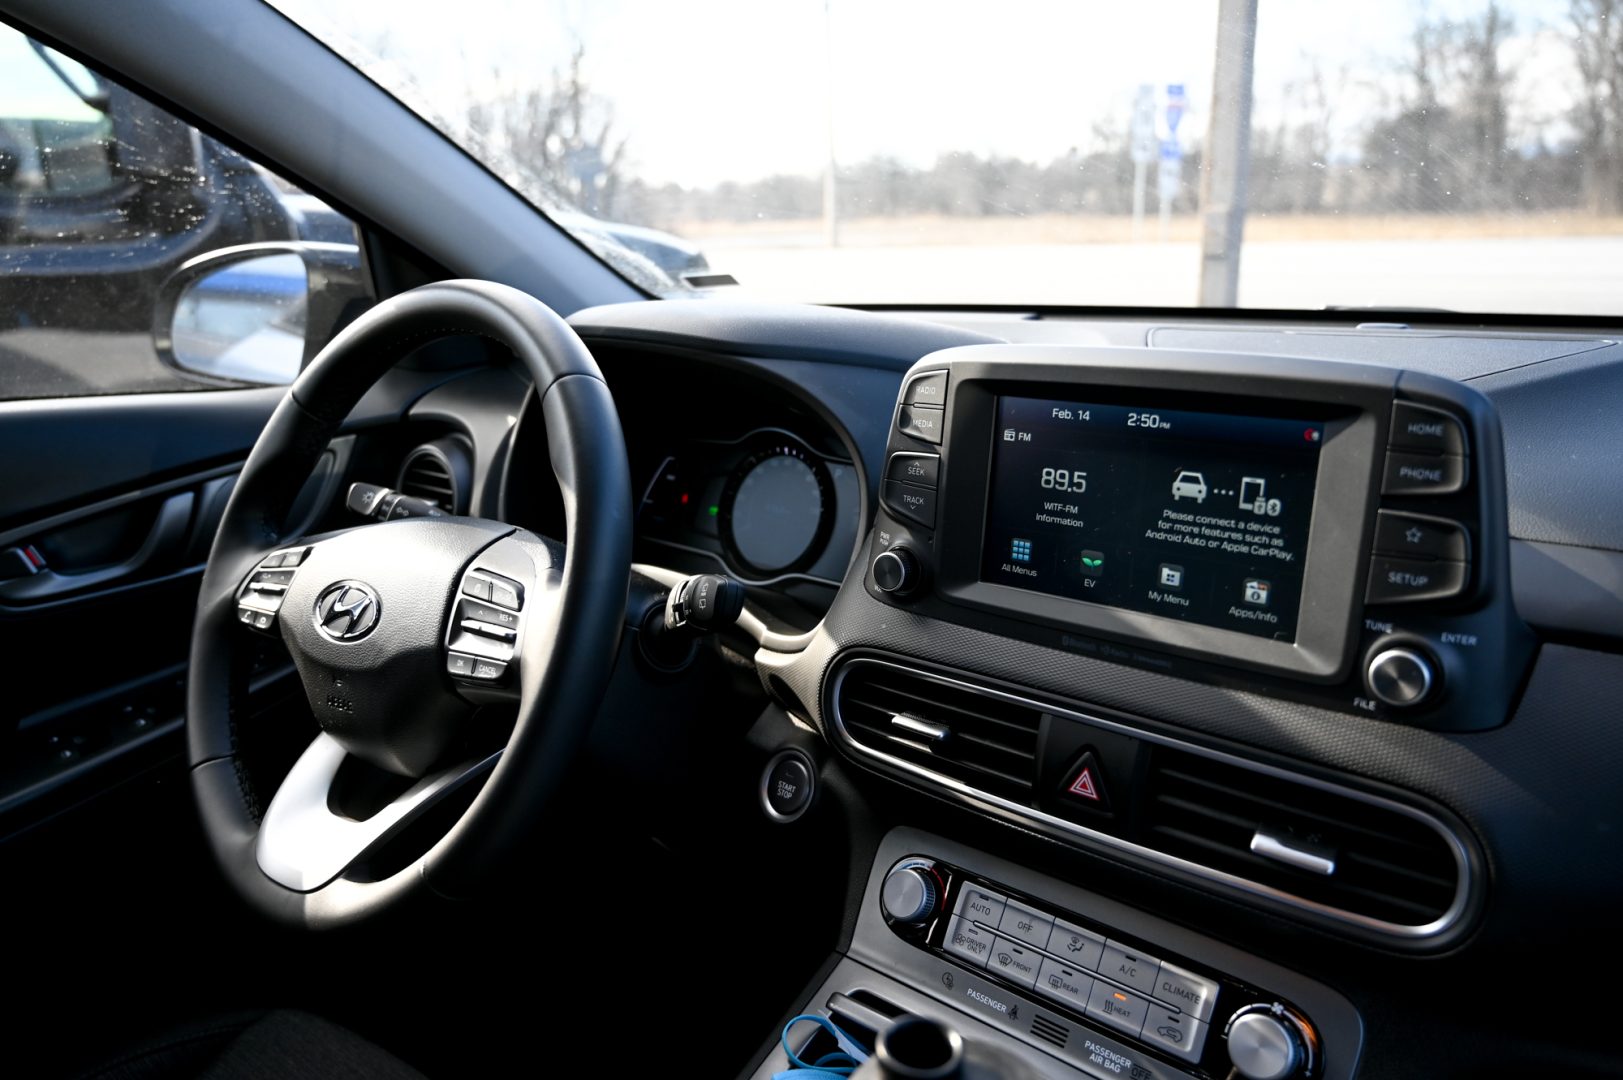 The inside of the Hyundai Kona electric vehicle.